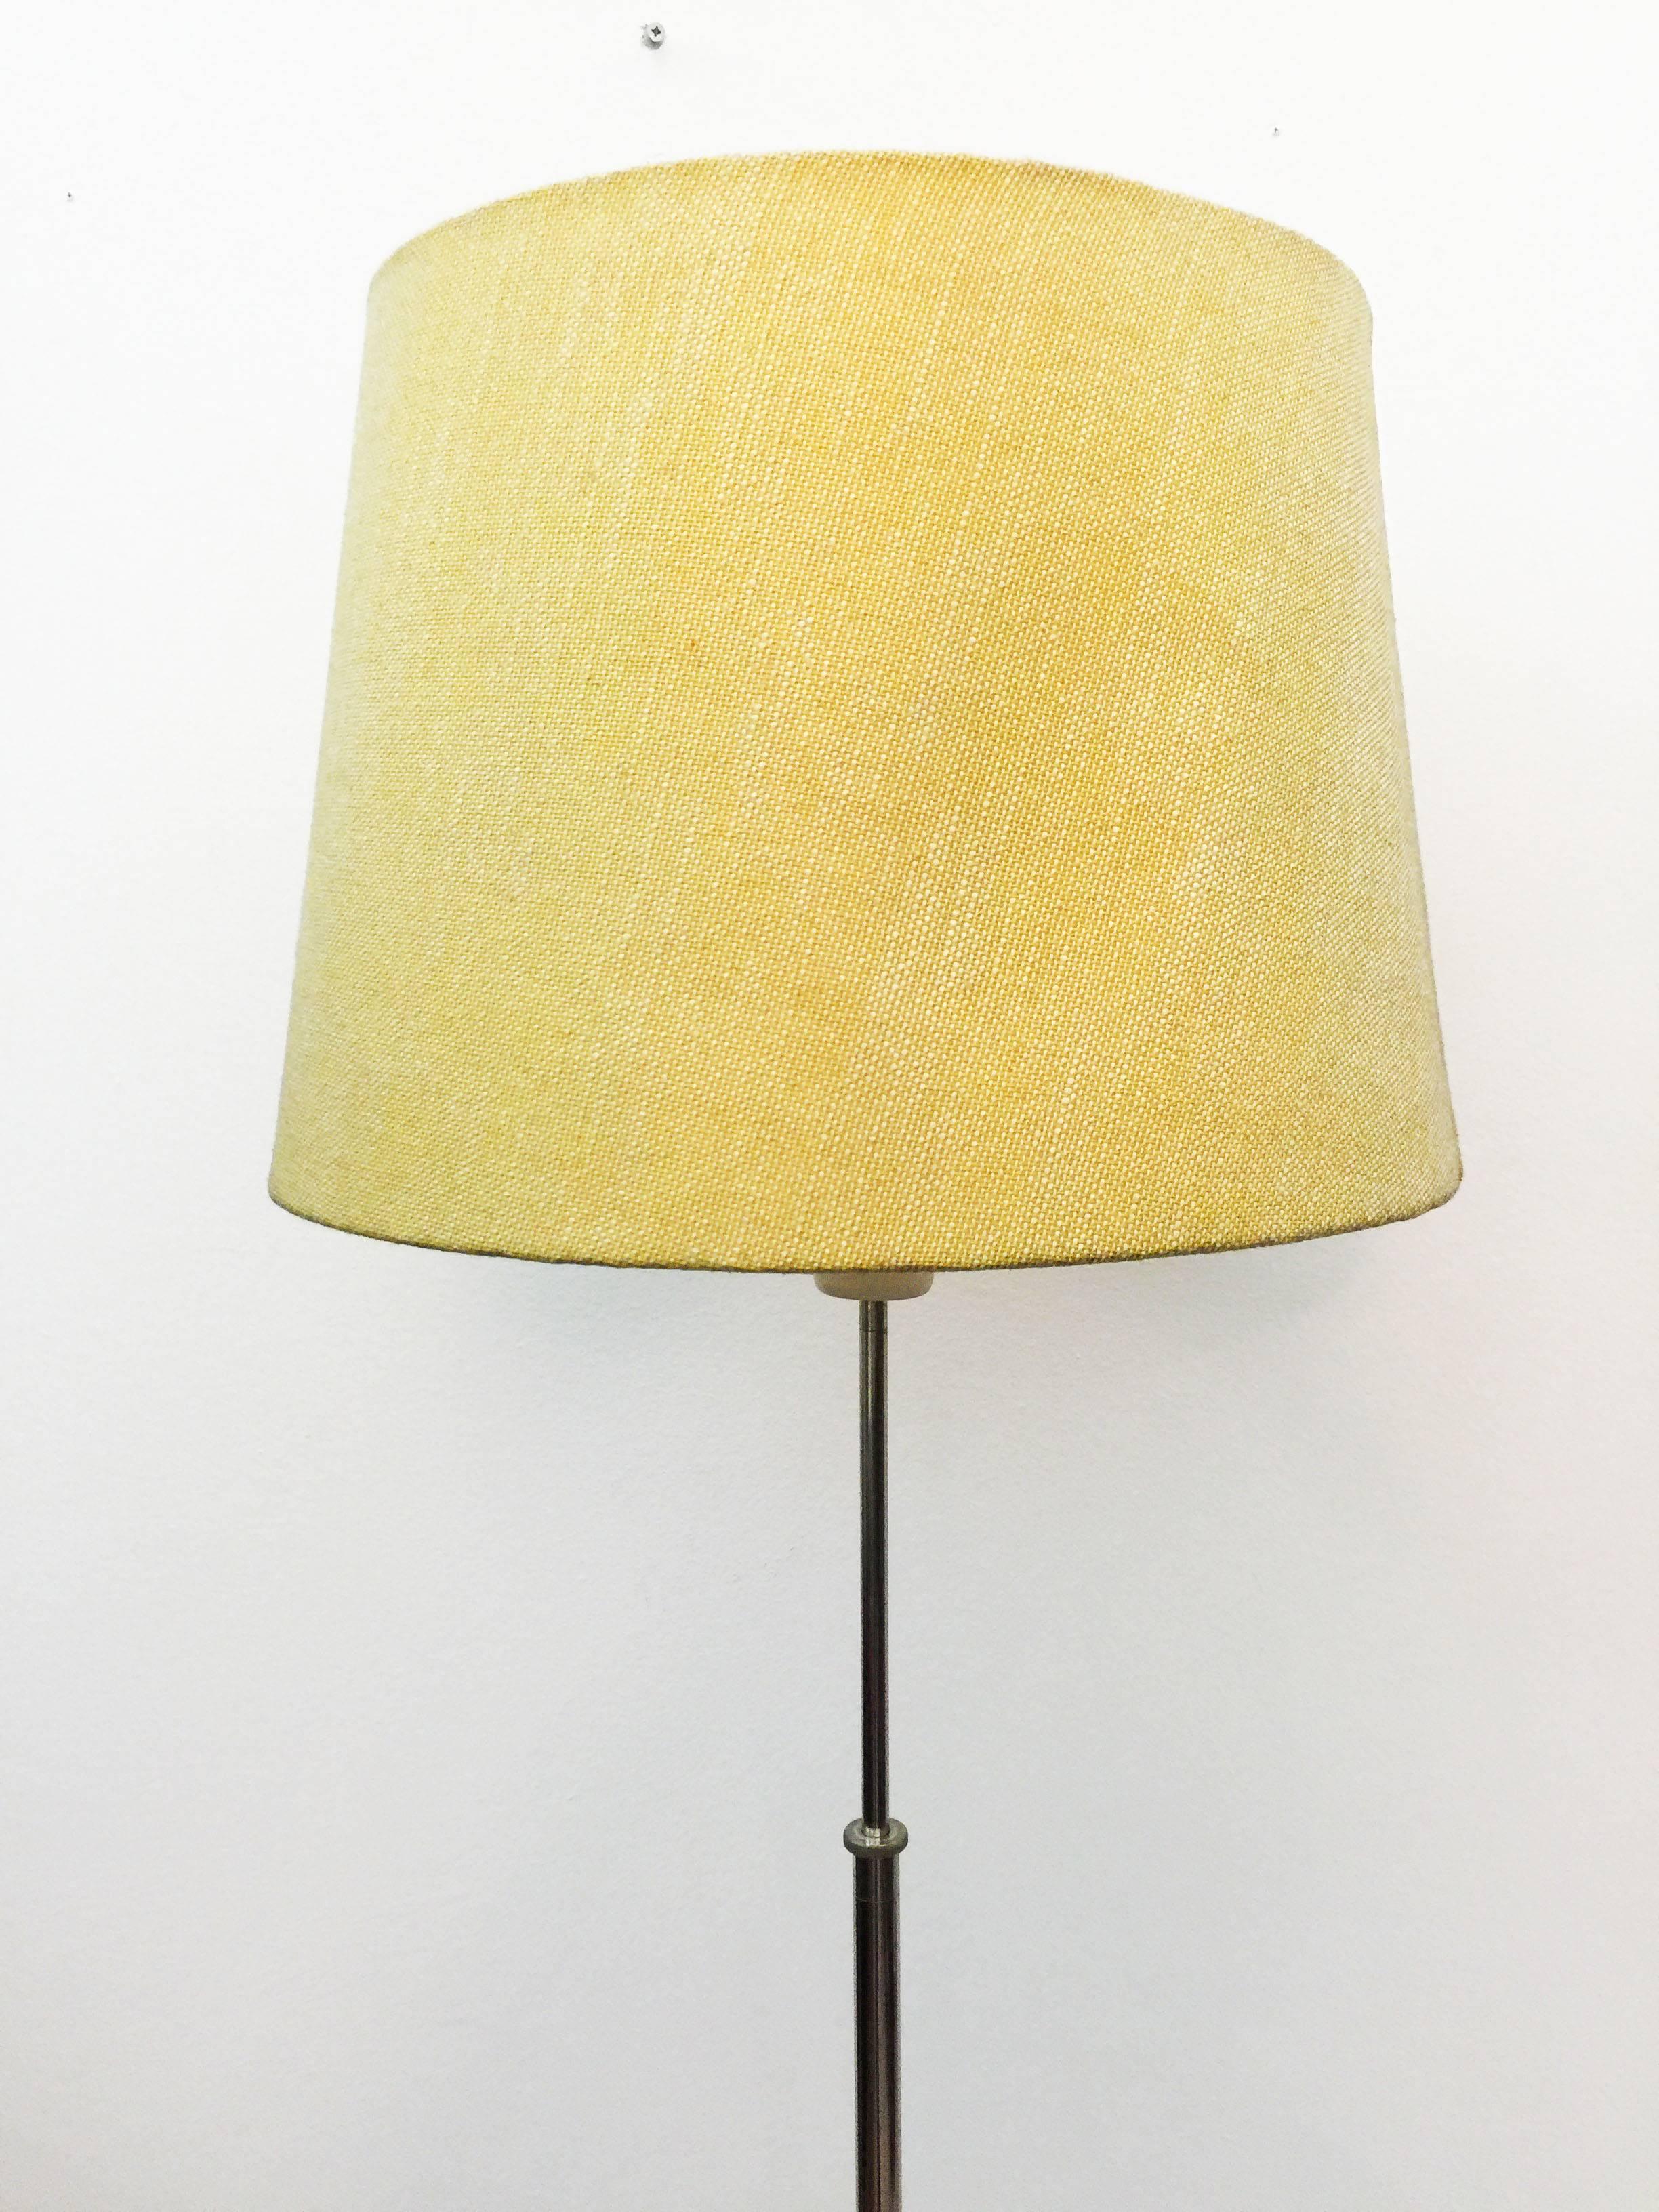 Adjustable J.T. Kalmar Floor Lamp In Good Condition For Sale In Vienna, AT